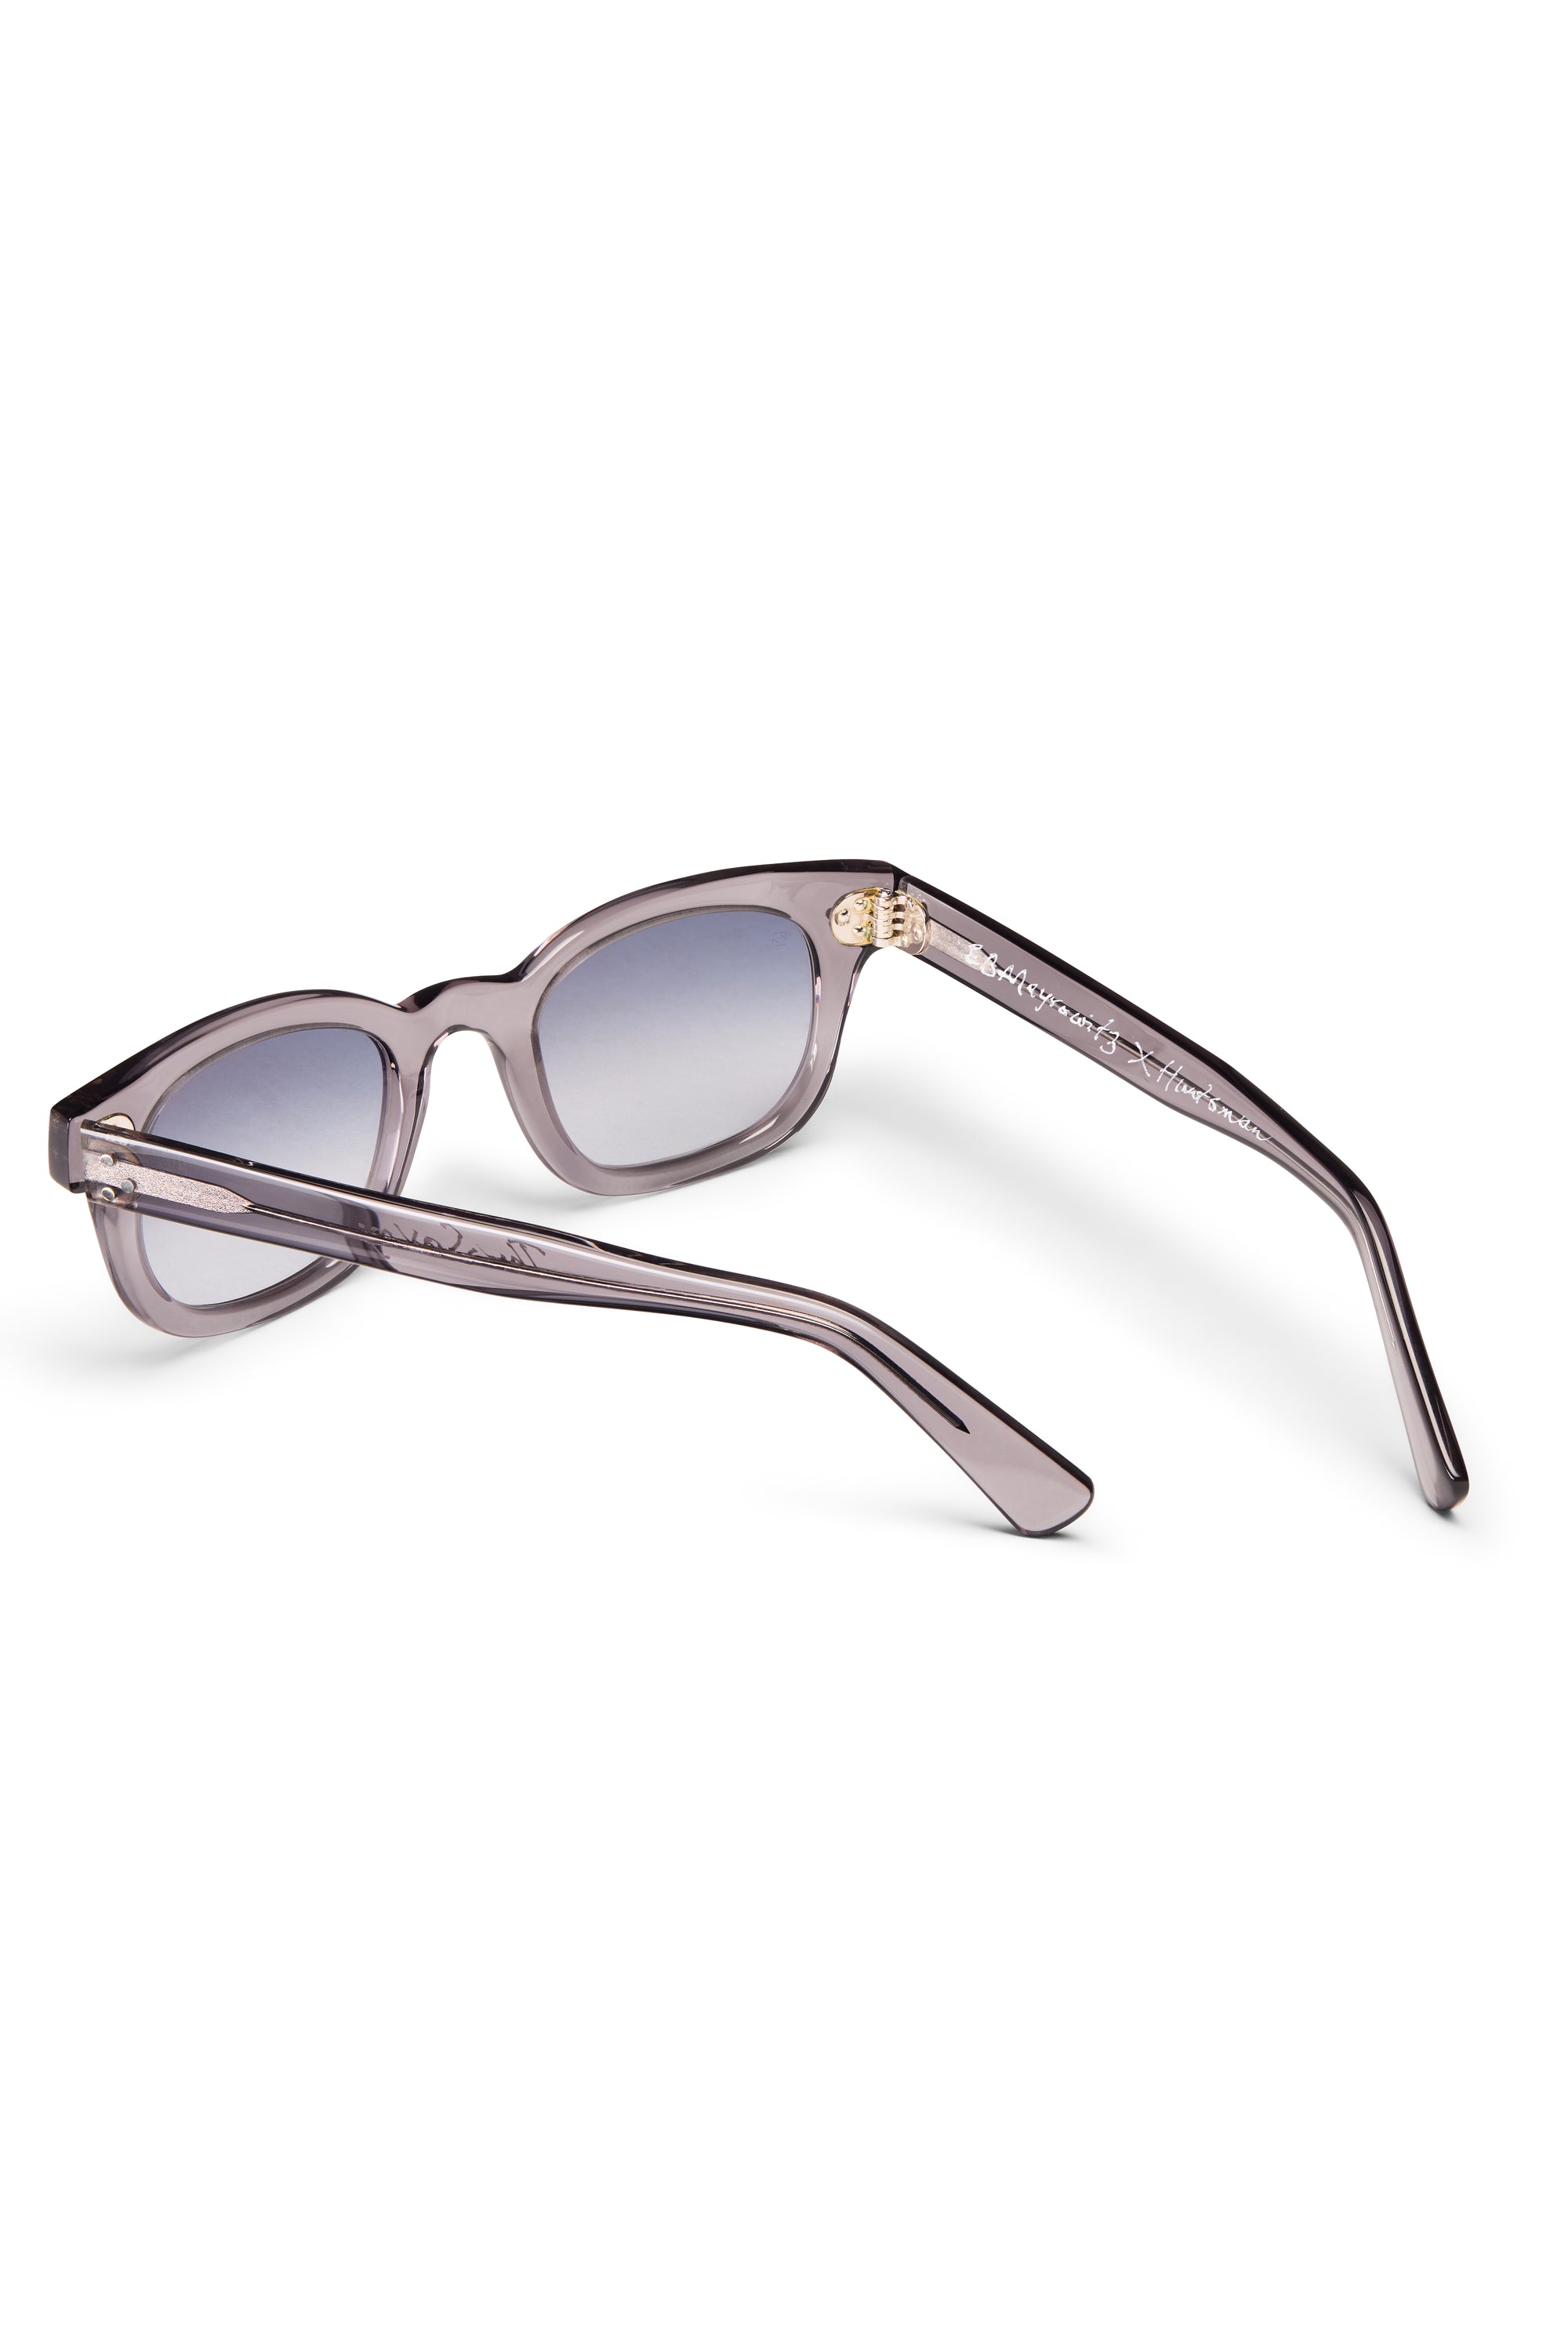 The Savoy Sunglasses